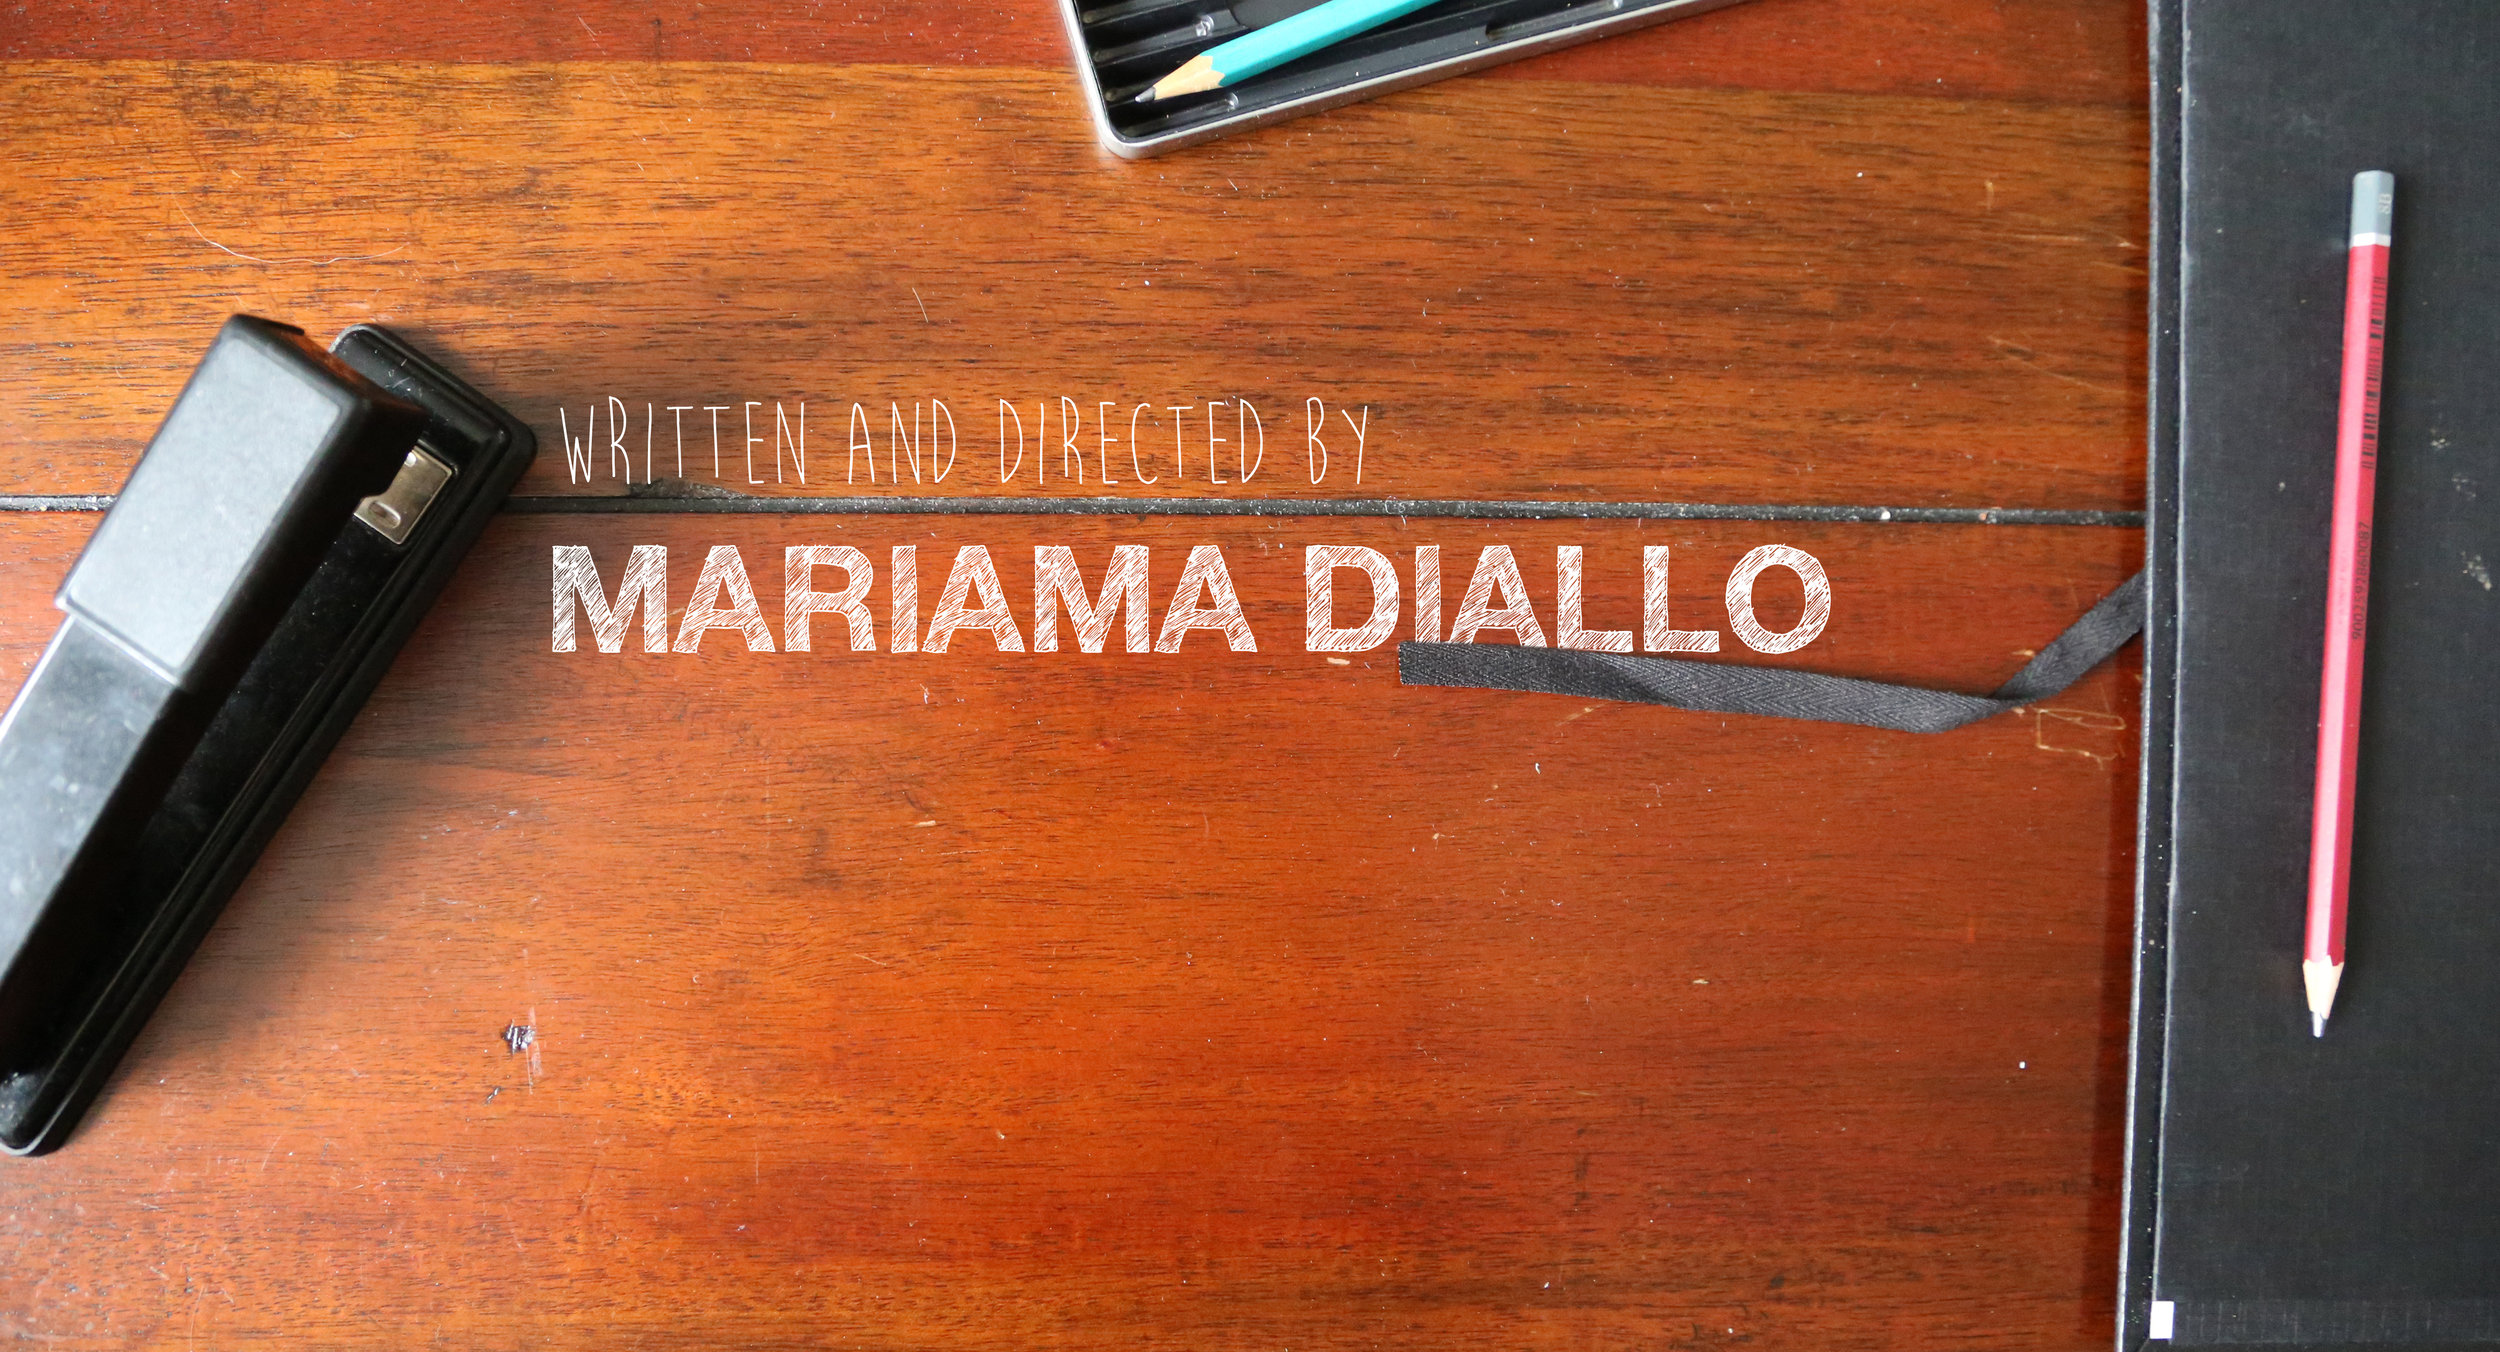  Title placard set for Mariama Diallo's 2017 film   Sketch .  